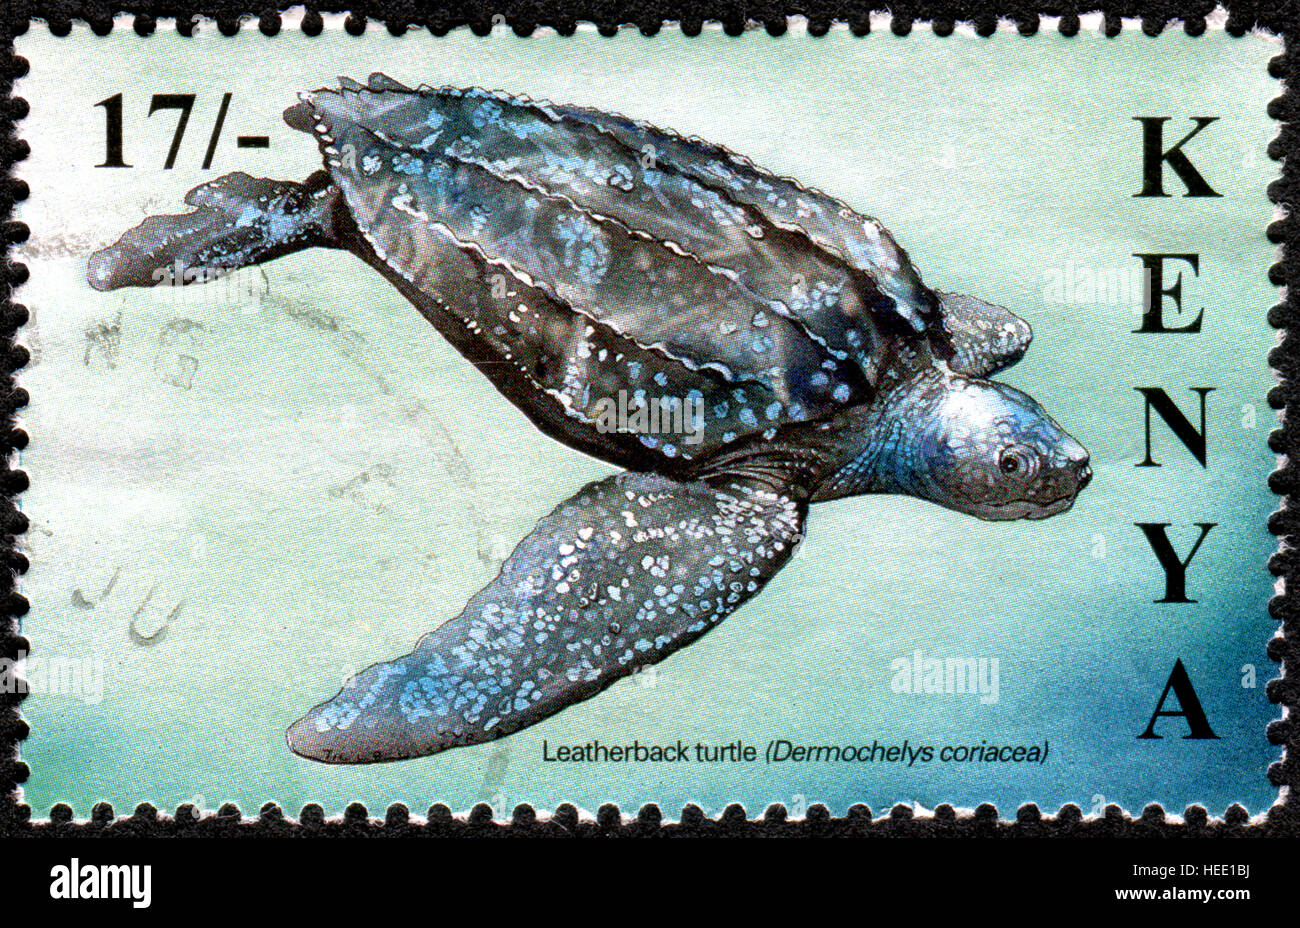 KENYA - circa 2000 : timbre imprimé au Kenya, montre la tortue luth (Dermochelys coriacea), circa 2000 Banque D'Images